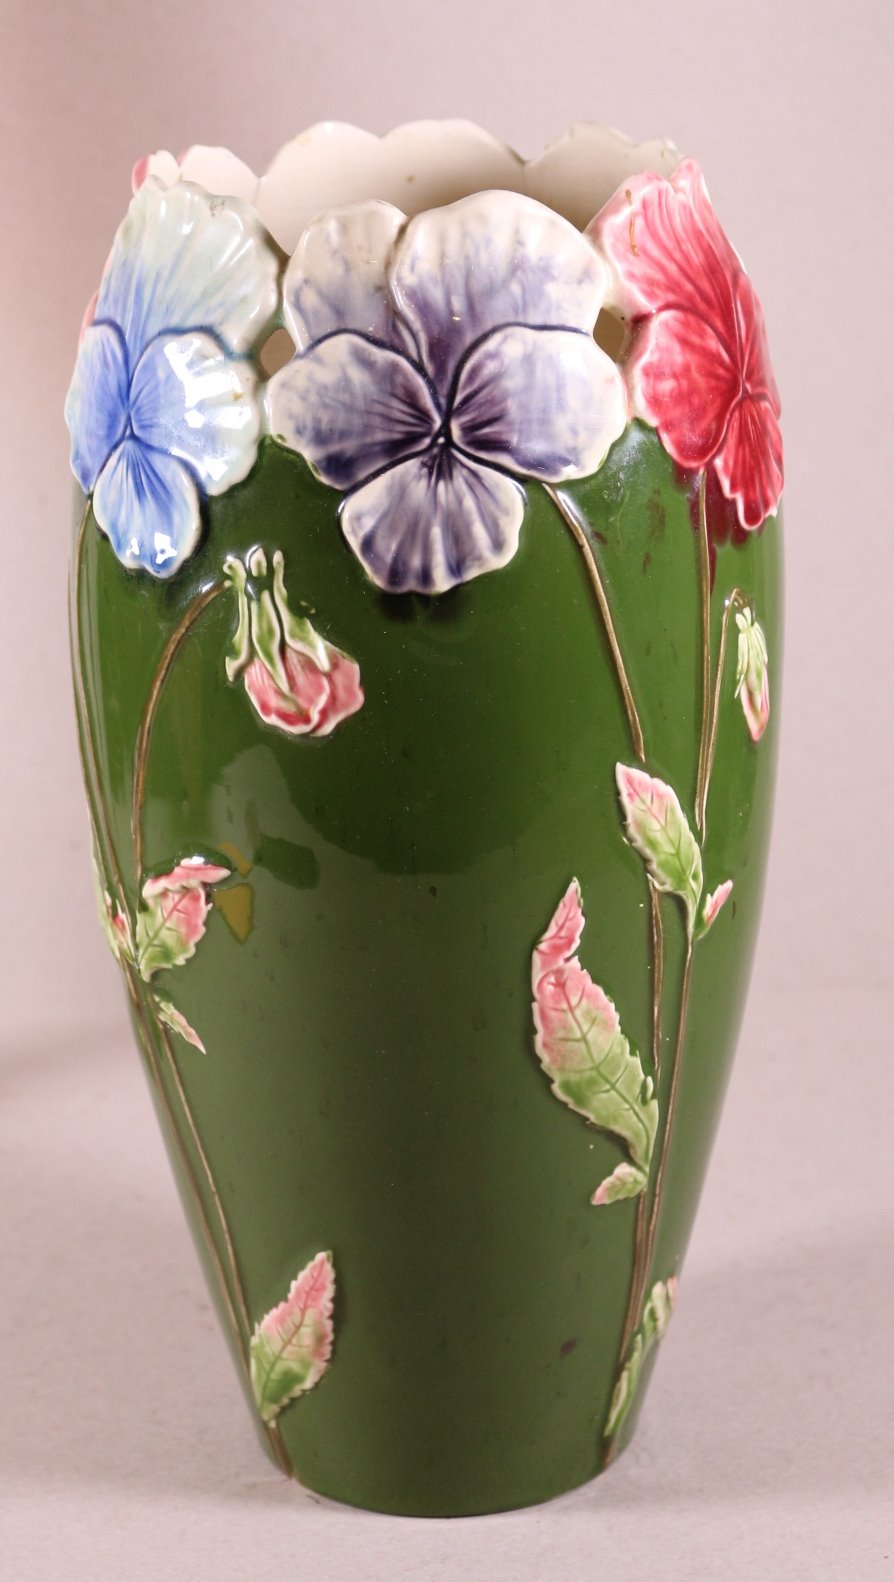 Váza s reliéfními motivy květin - Váza